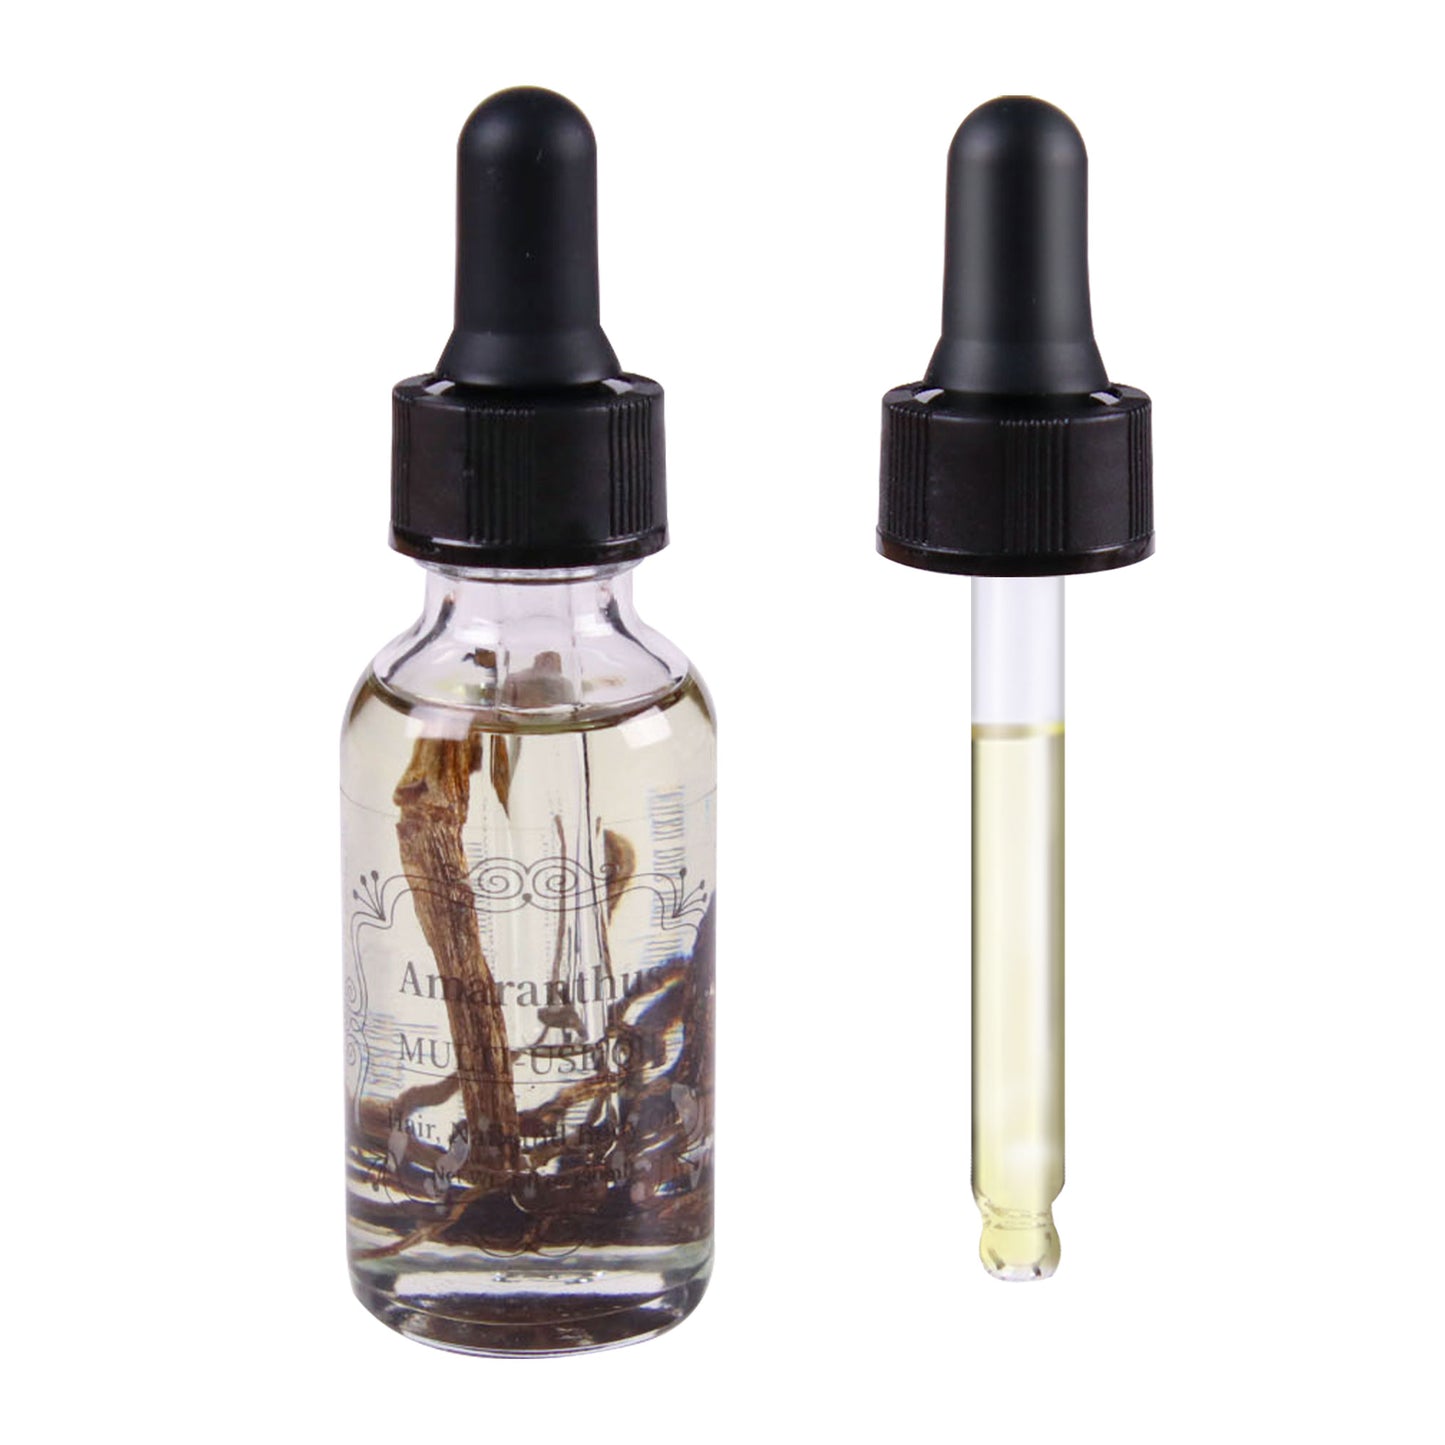 Amaranthus Multi-Use Body Oil 